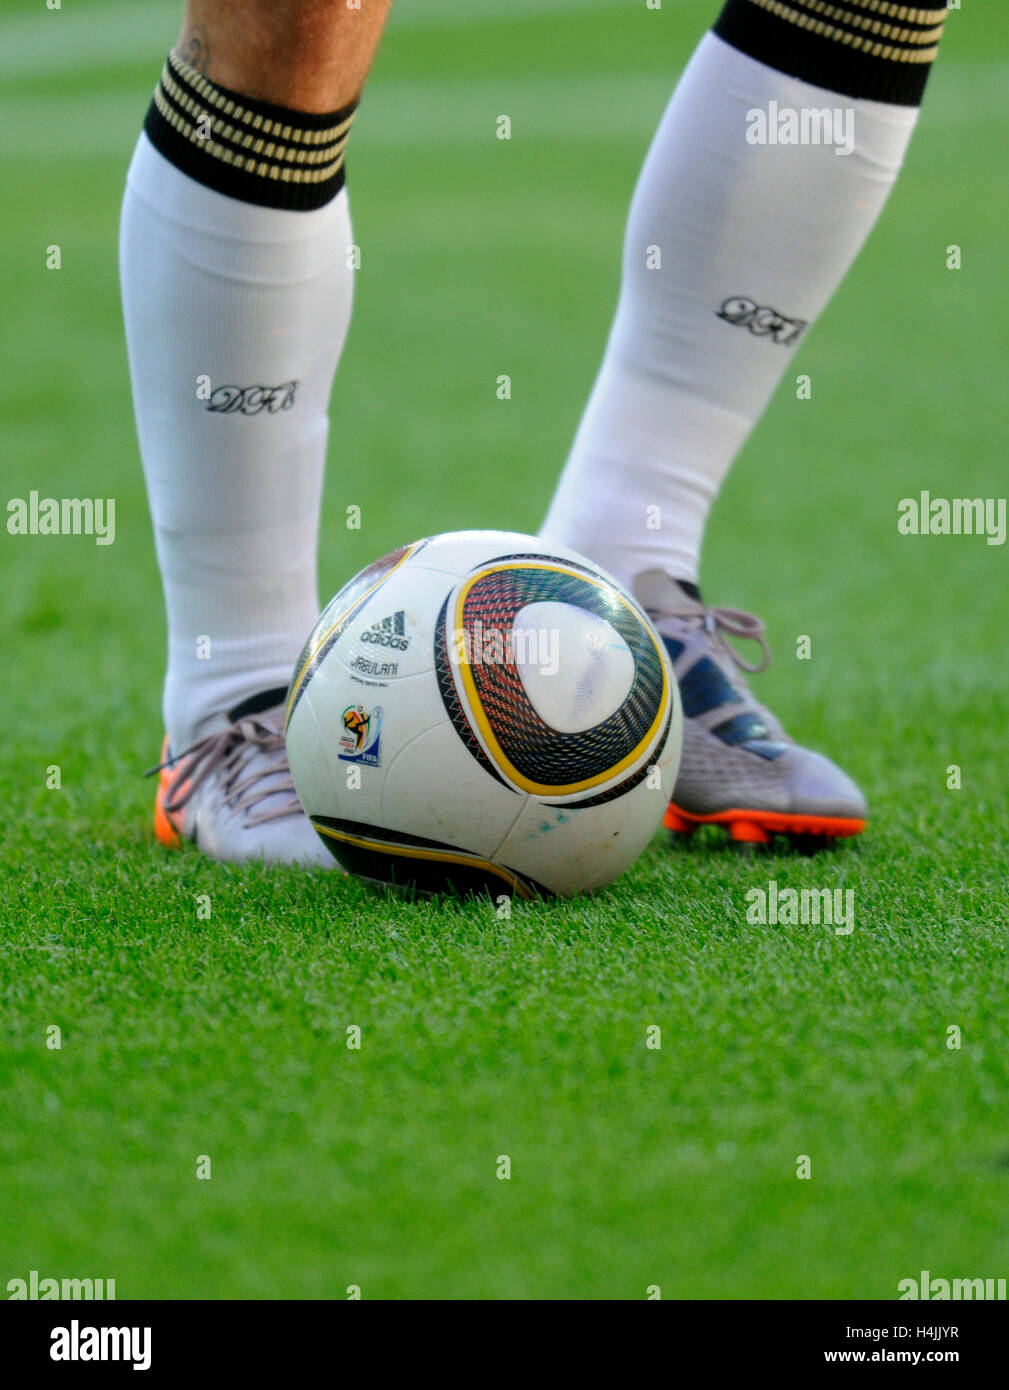 Footballers' legs with DFB Socks and adidas World Cup ball Jabulani Stock Photo